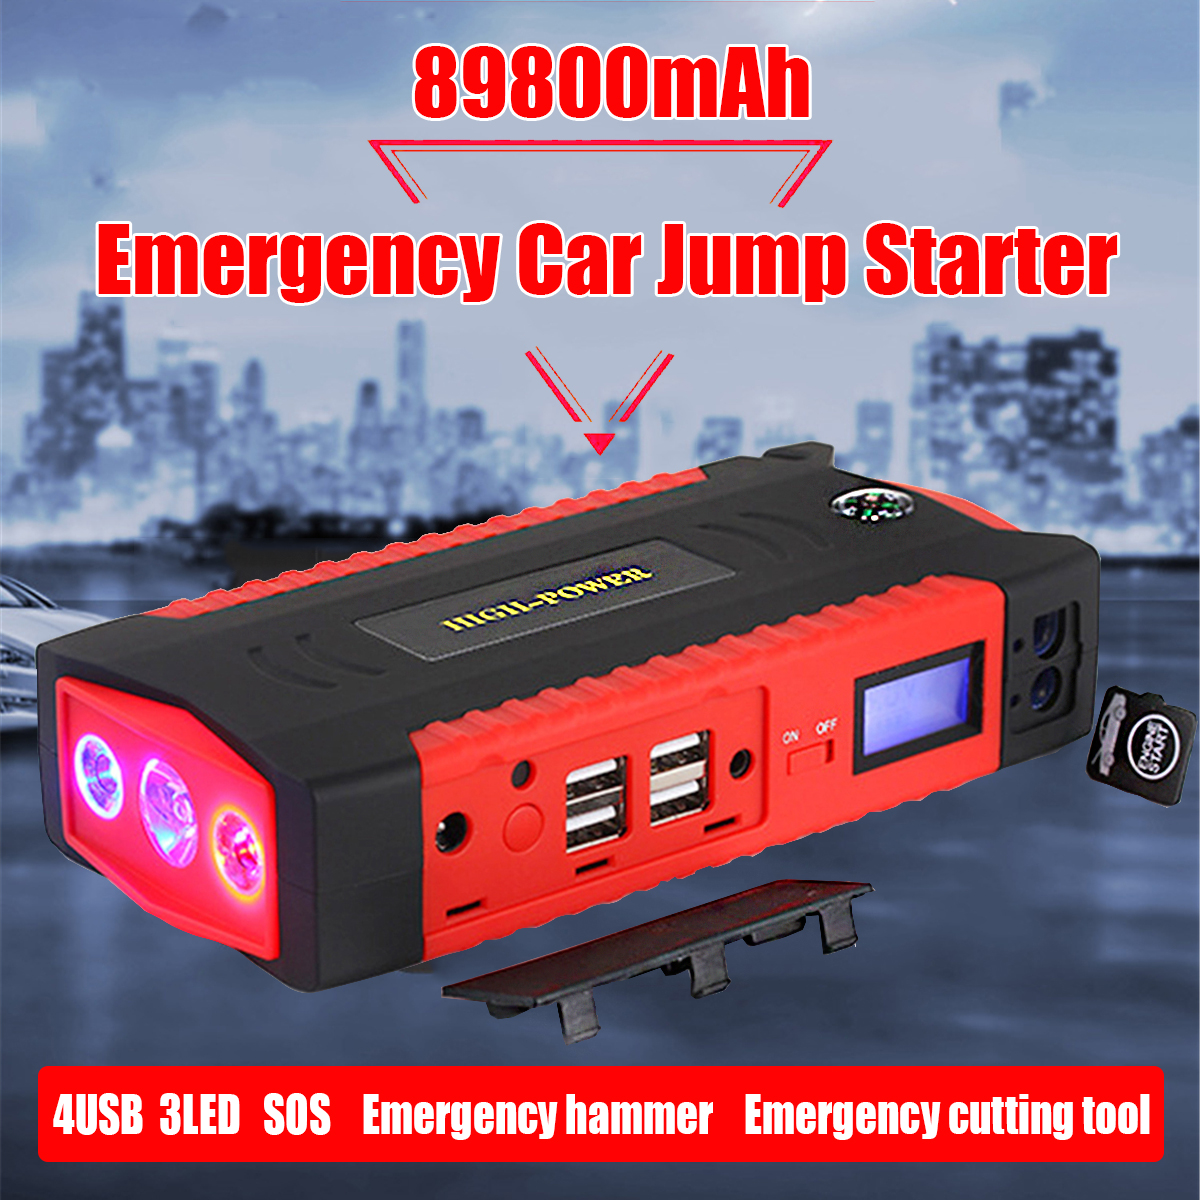 89800mAh Car Jump Starter Booster 4Usb Emergency Charger Power Bank Battery LED SOS